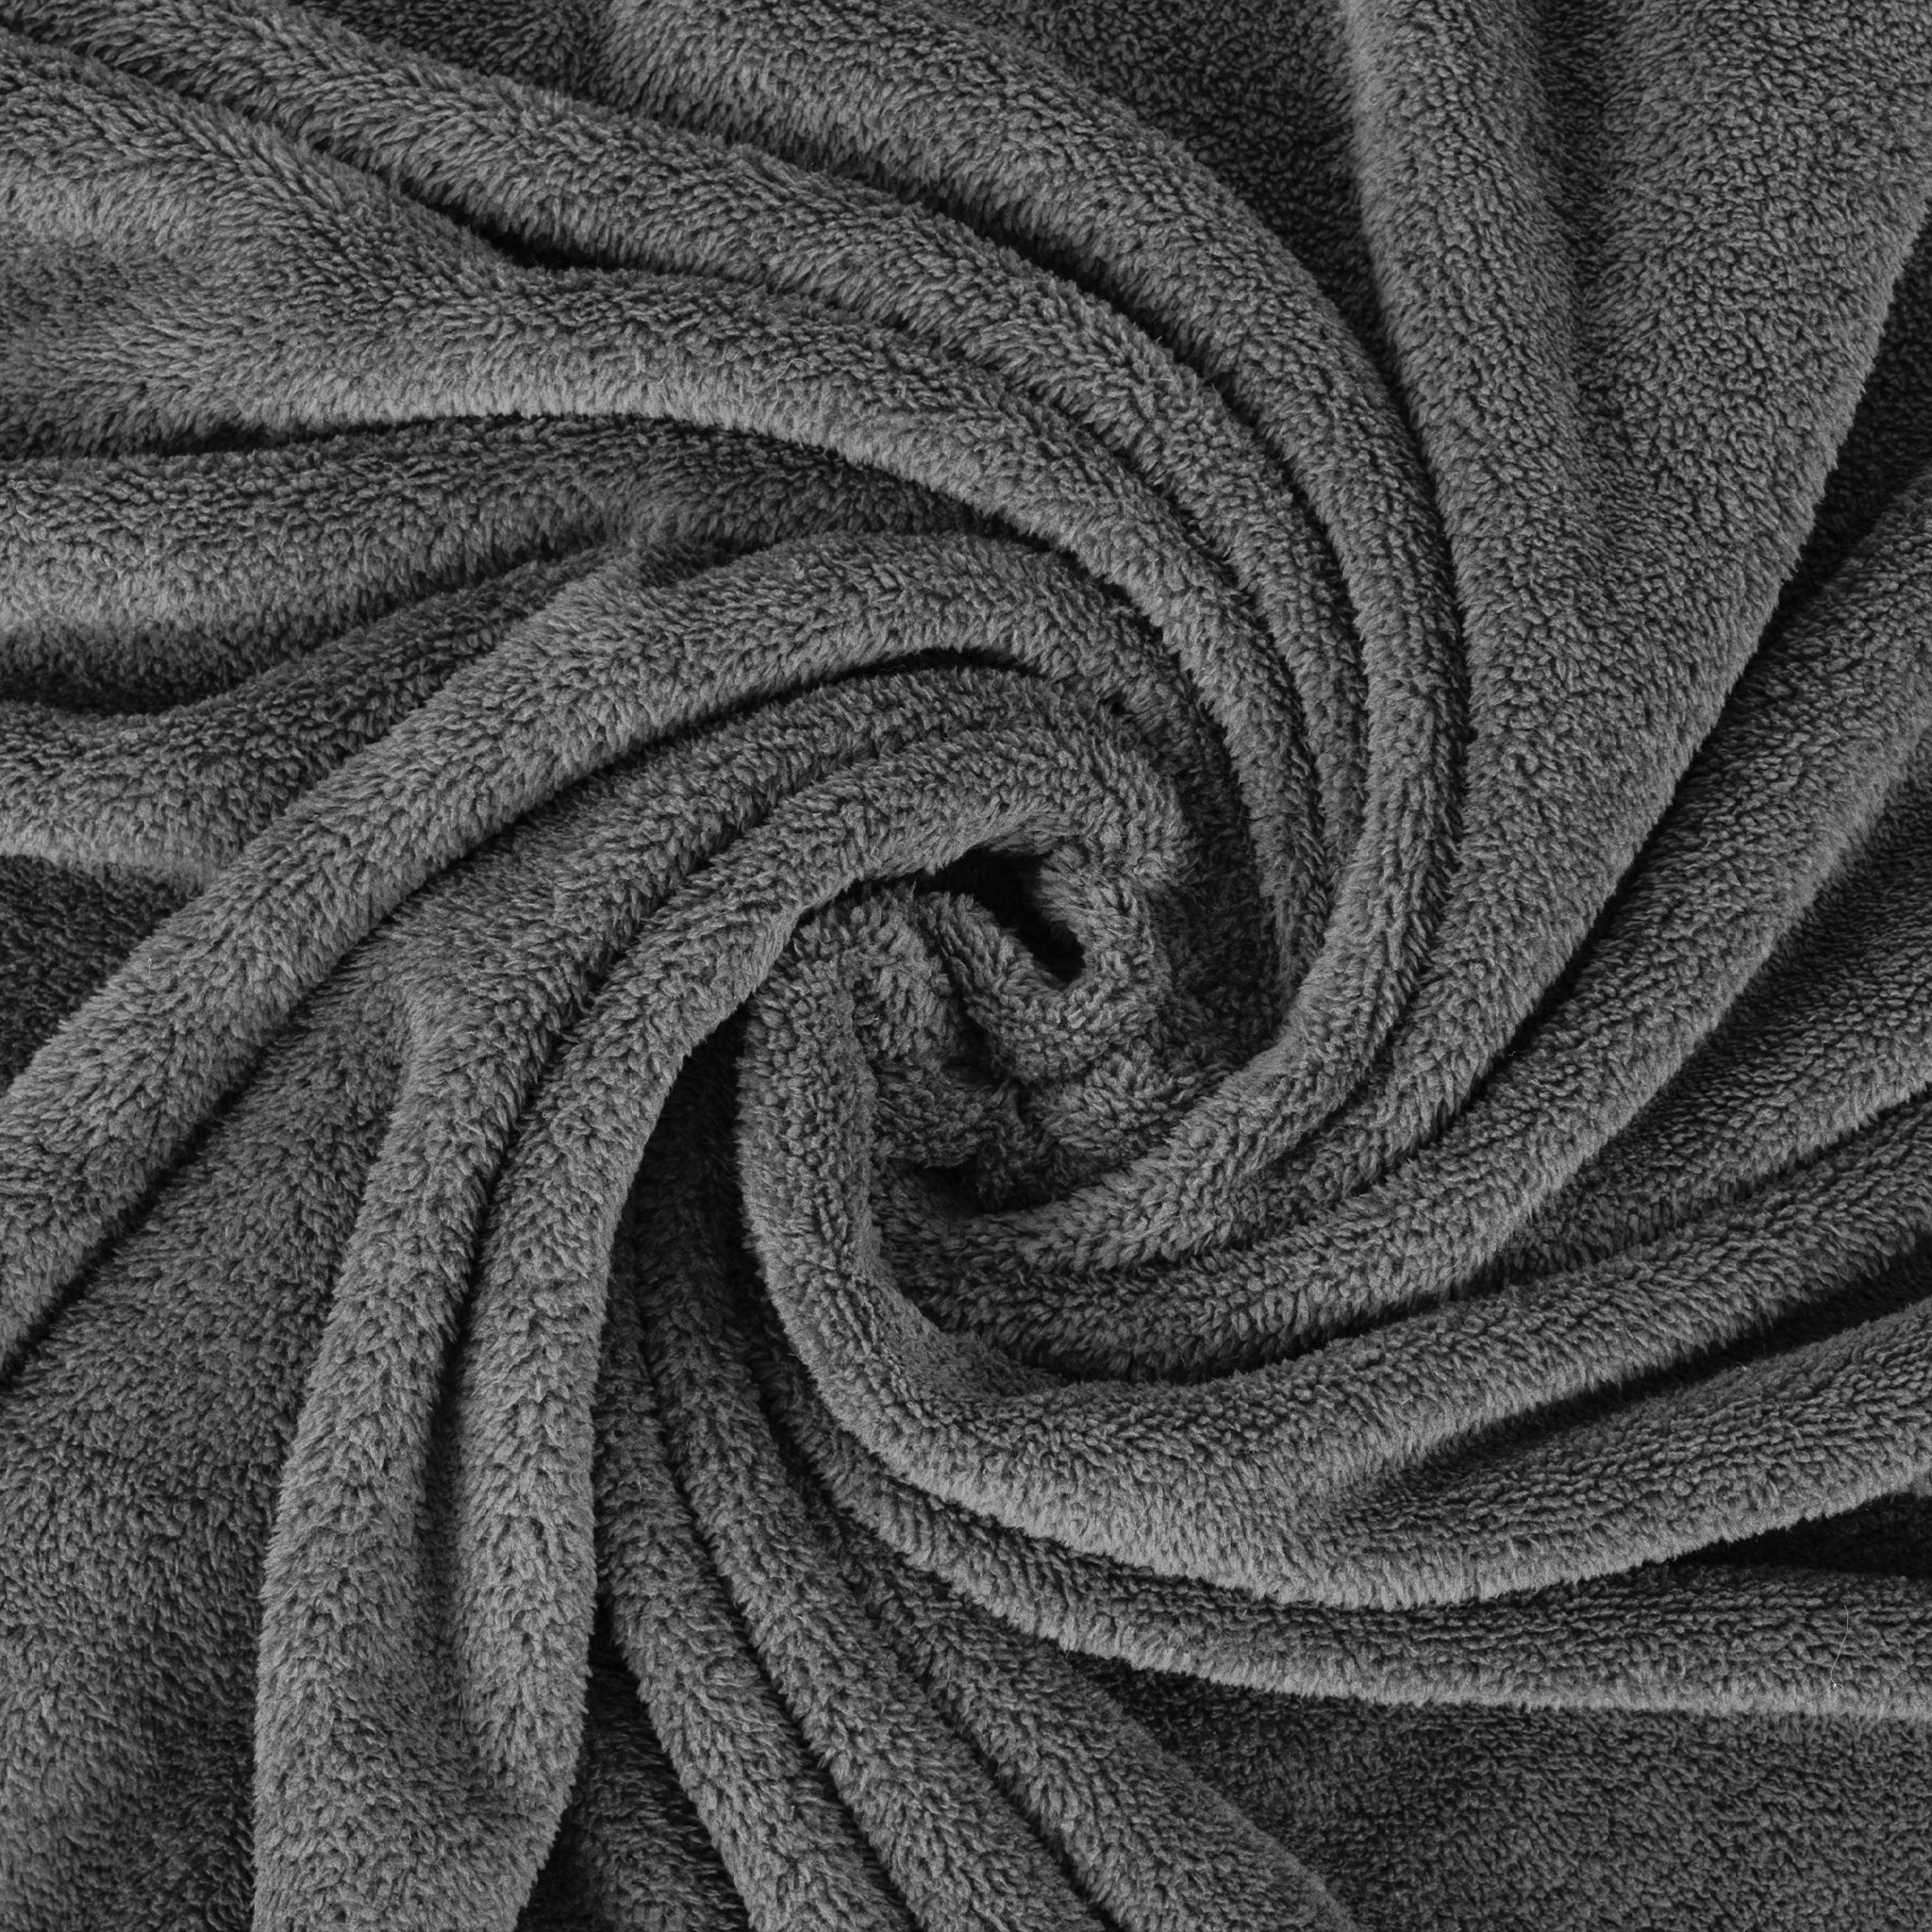 American Soft Linen - Bedding Fleece Blanket - Throw Size 50x60 inches - Gray - 5